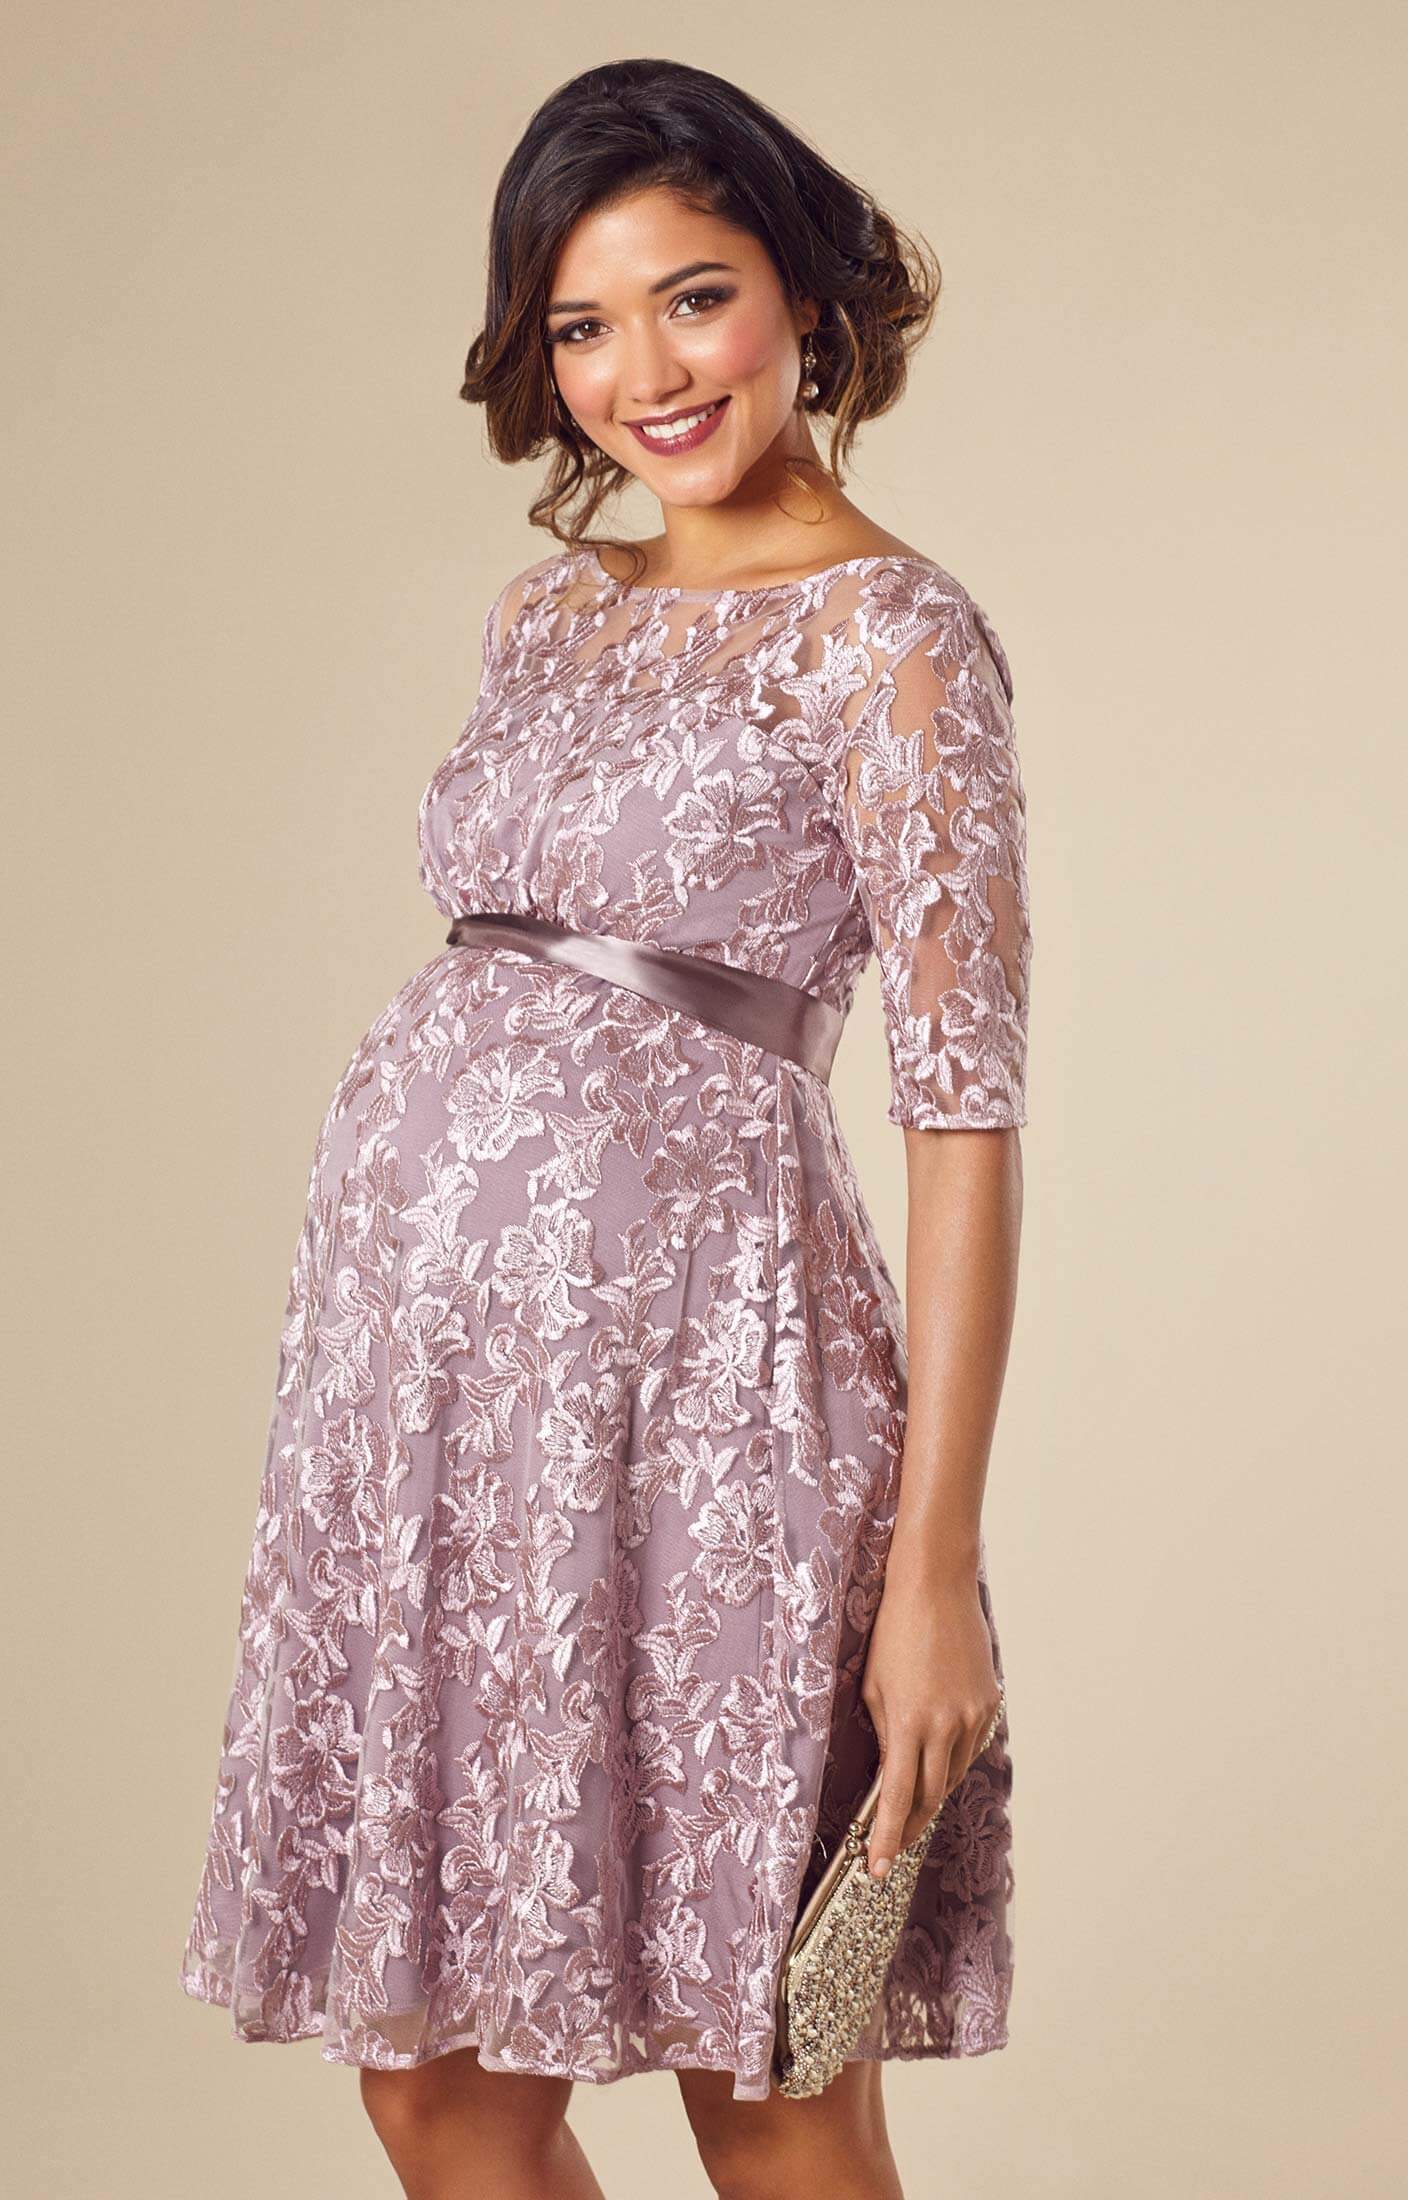 Asha Maternity Dress Lilac - Maternity Wedding Dresses, Evening Wear ...